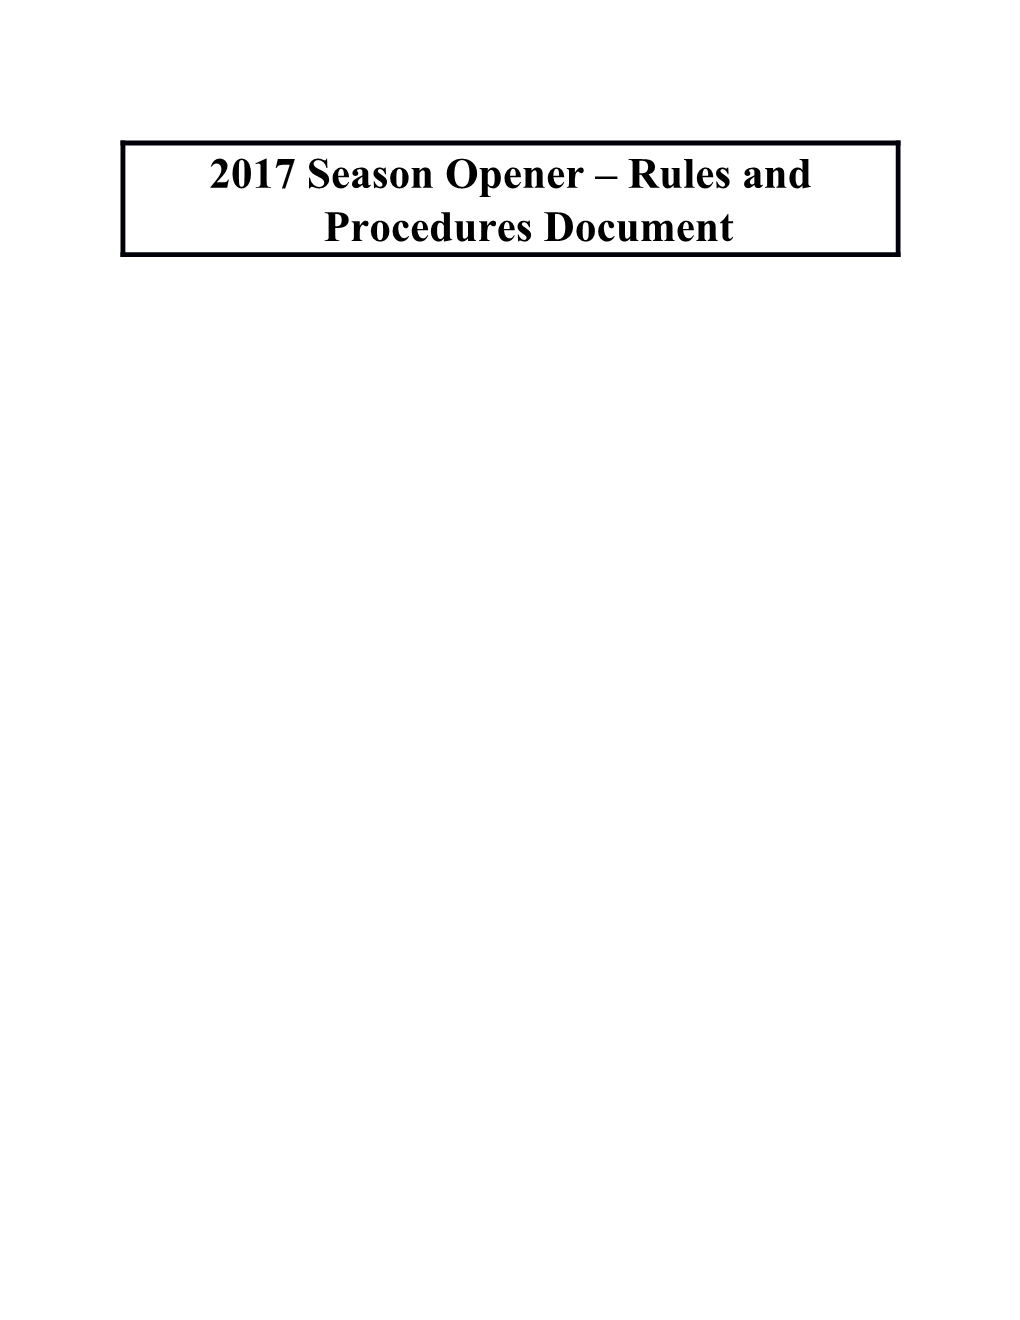 2017Season Opener Rules and Procedures Document